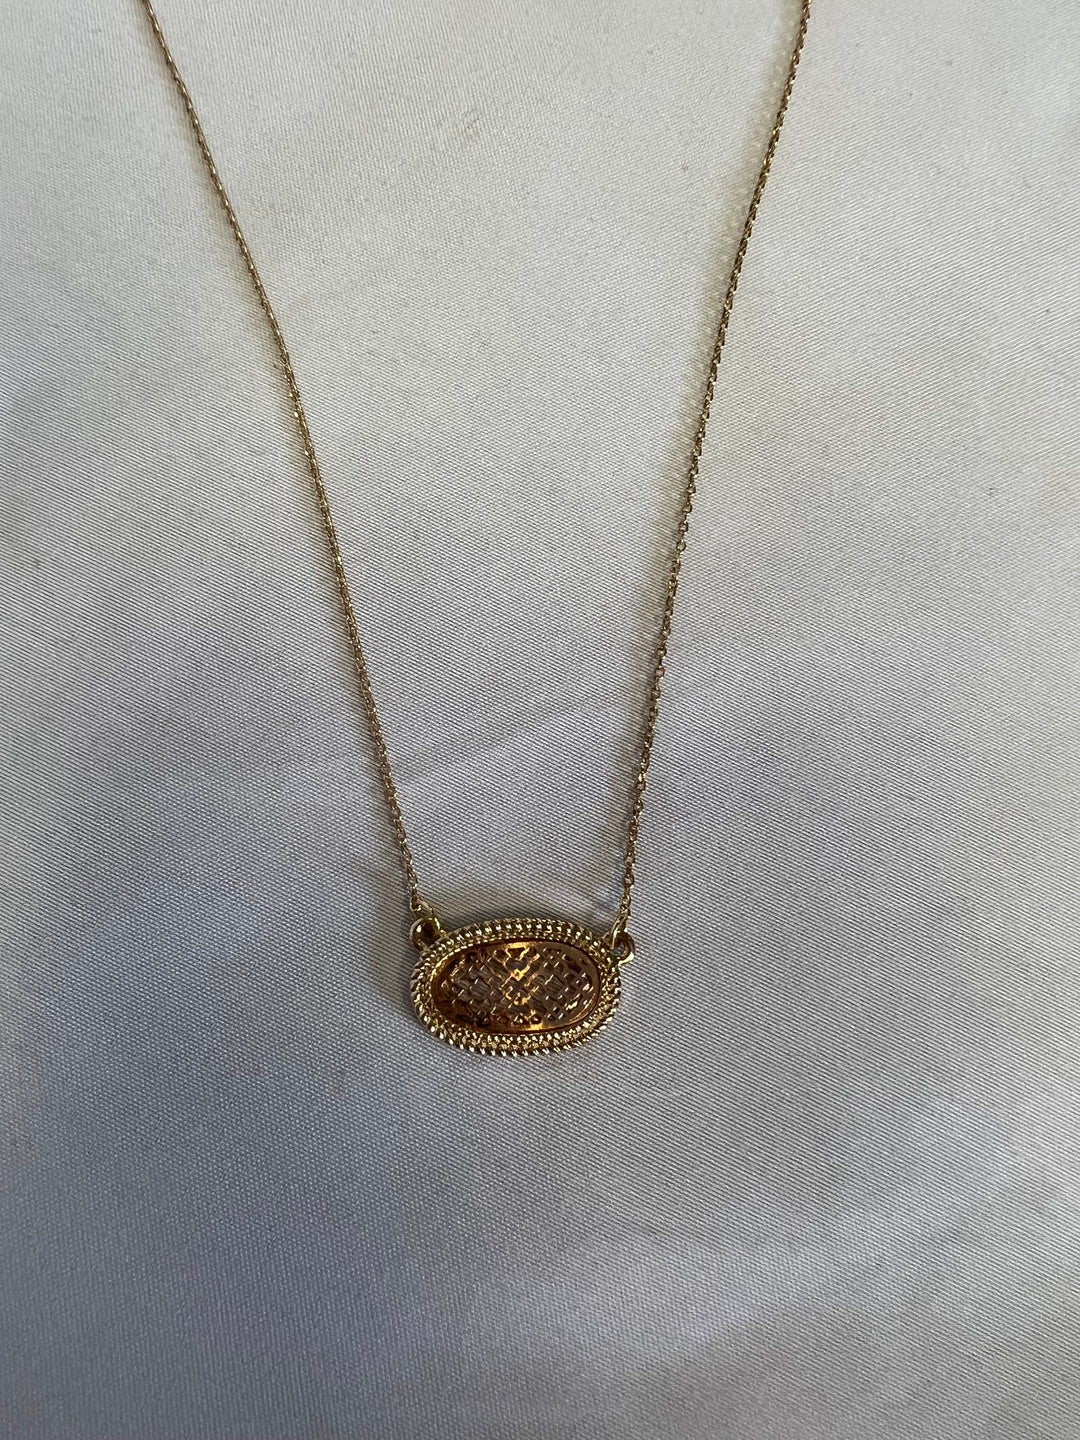 Oval Filigree Necklace - Rose Gold